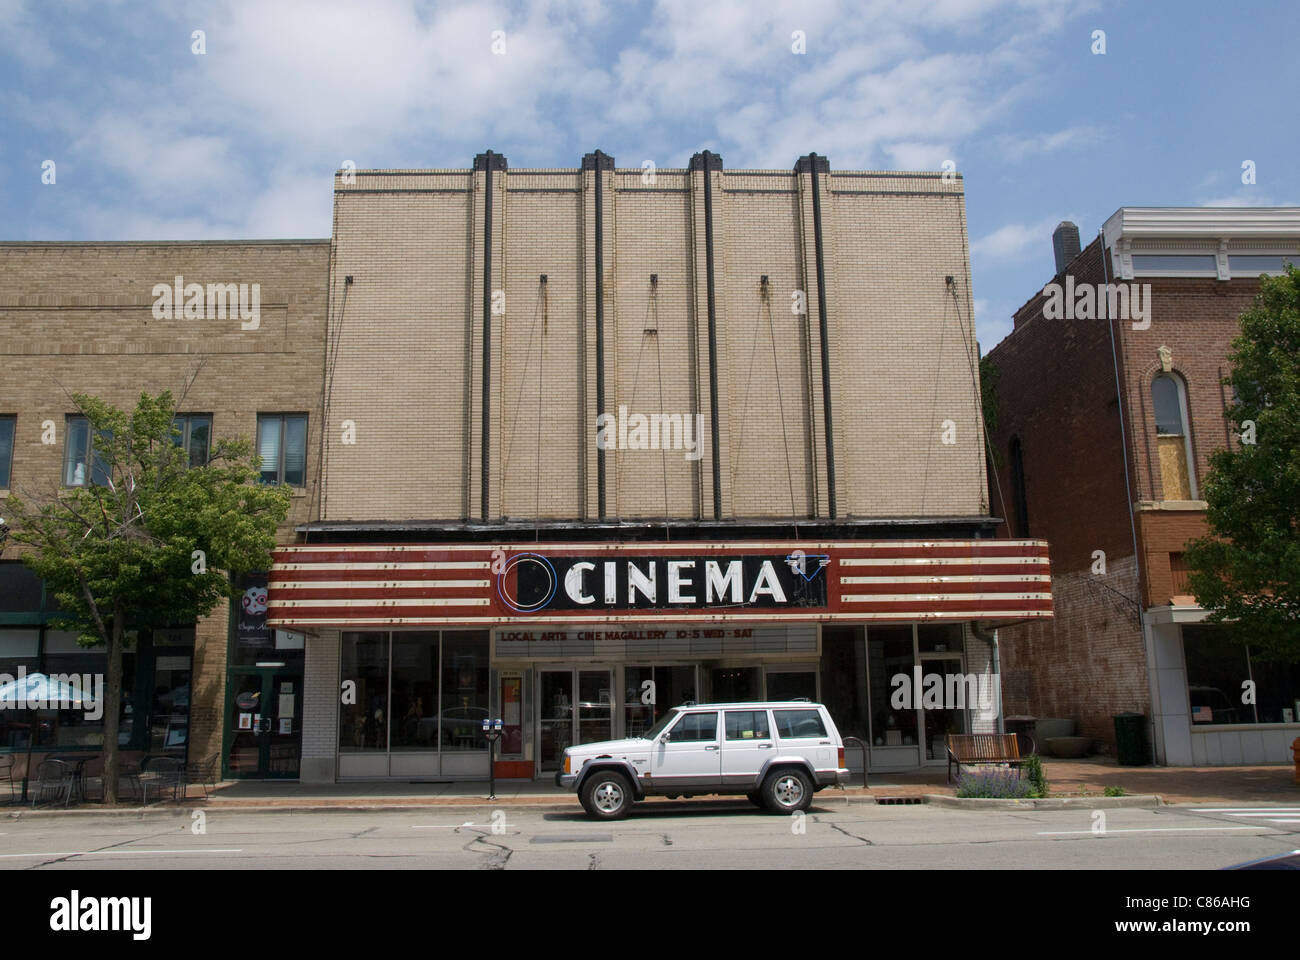 Old Style Cinema with neon signs, Urbana, Illinois, USA Stock Photo